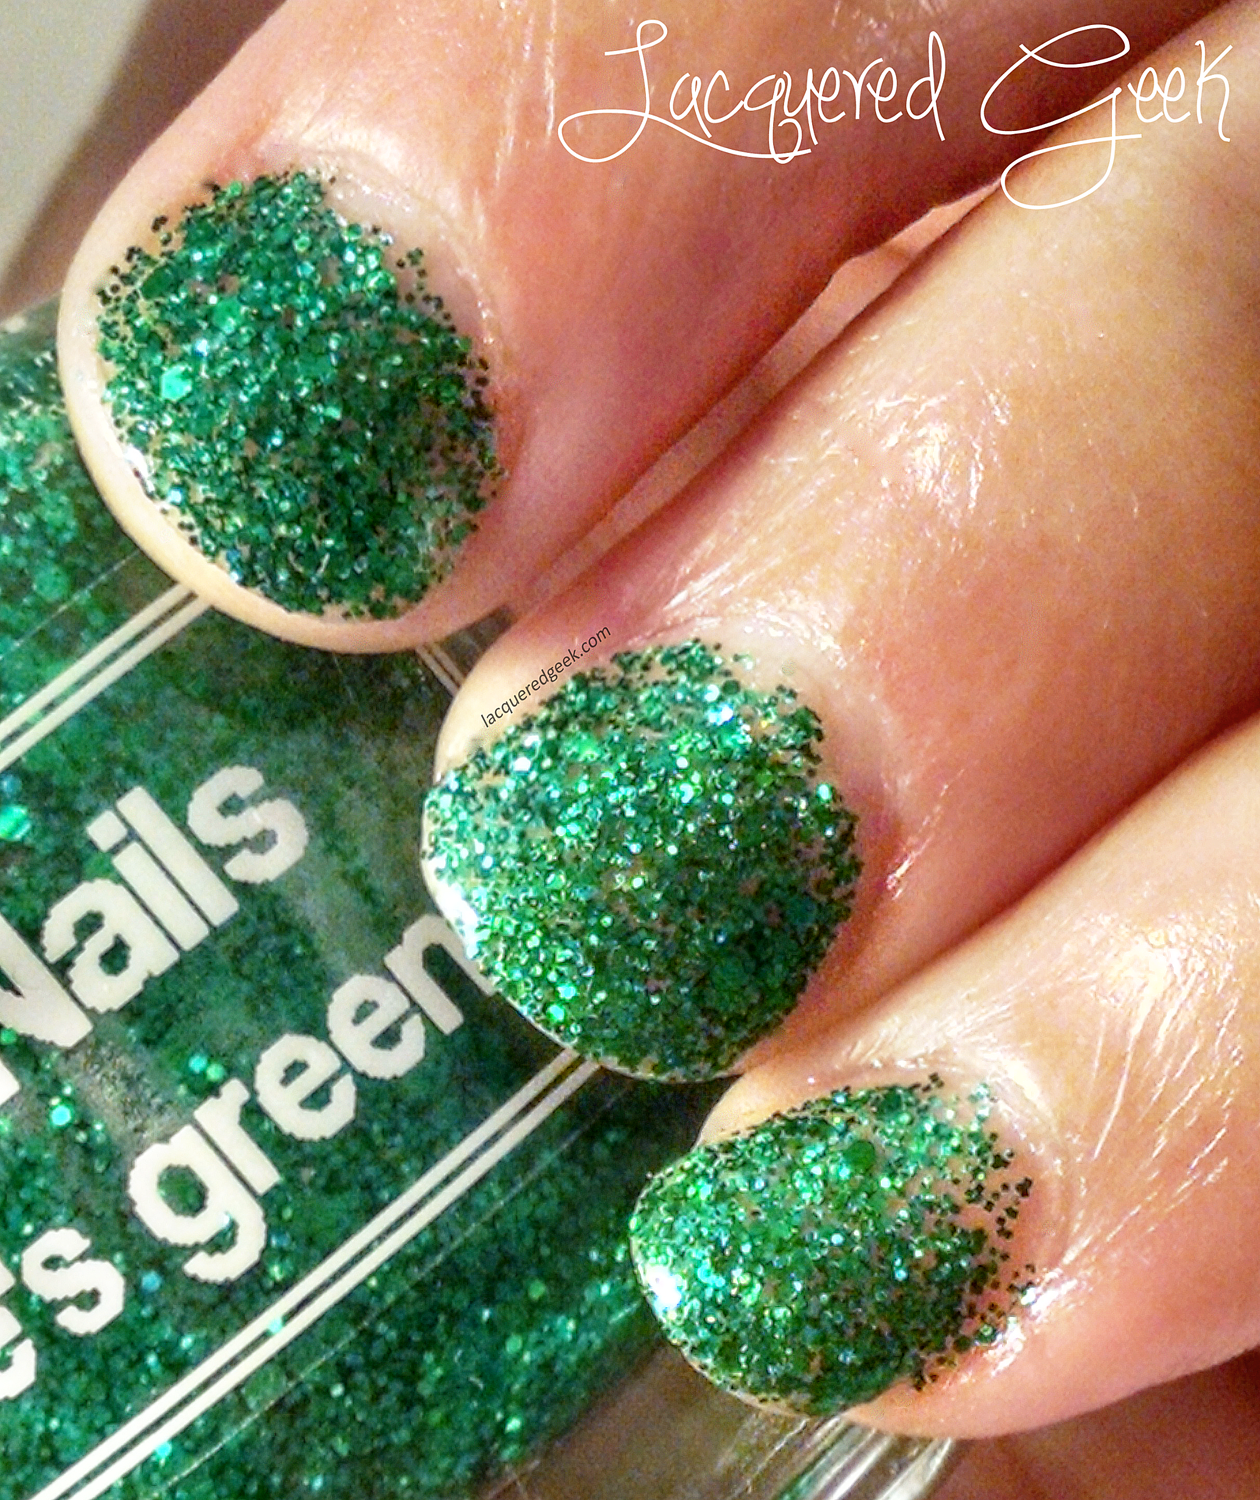 Digital Nails deGrasse’s greener nail polish swatch